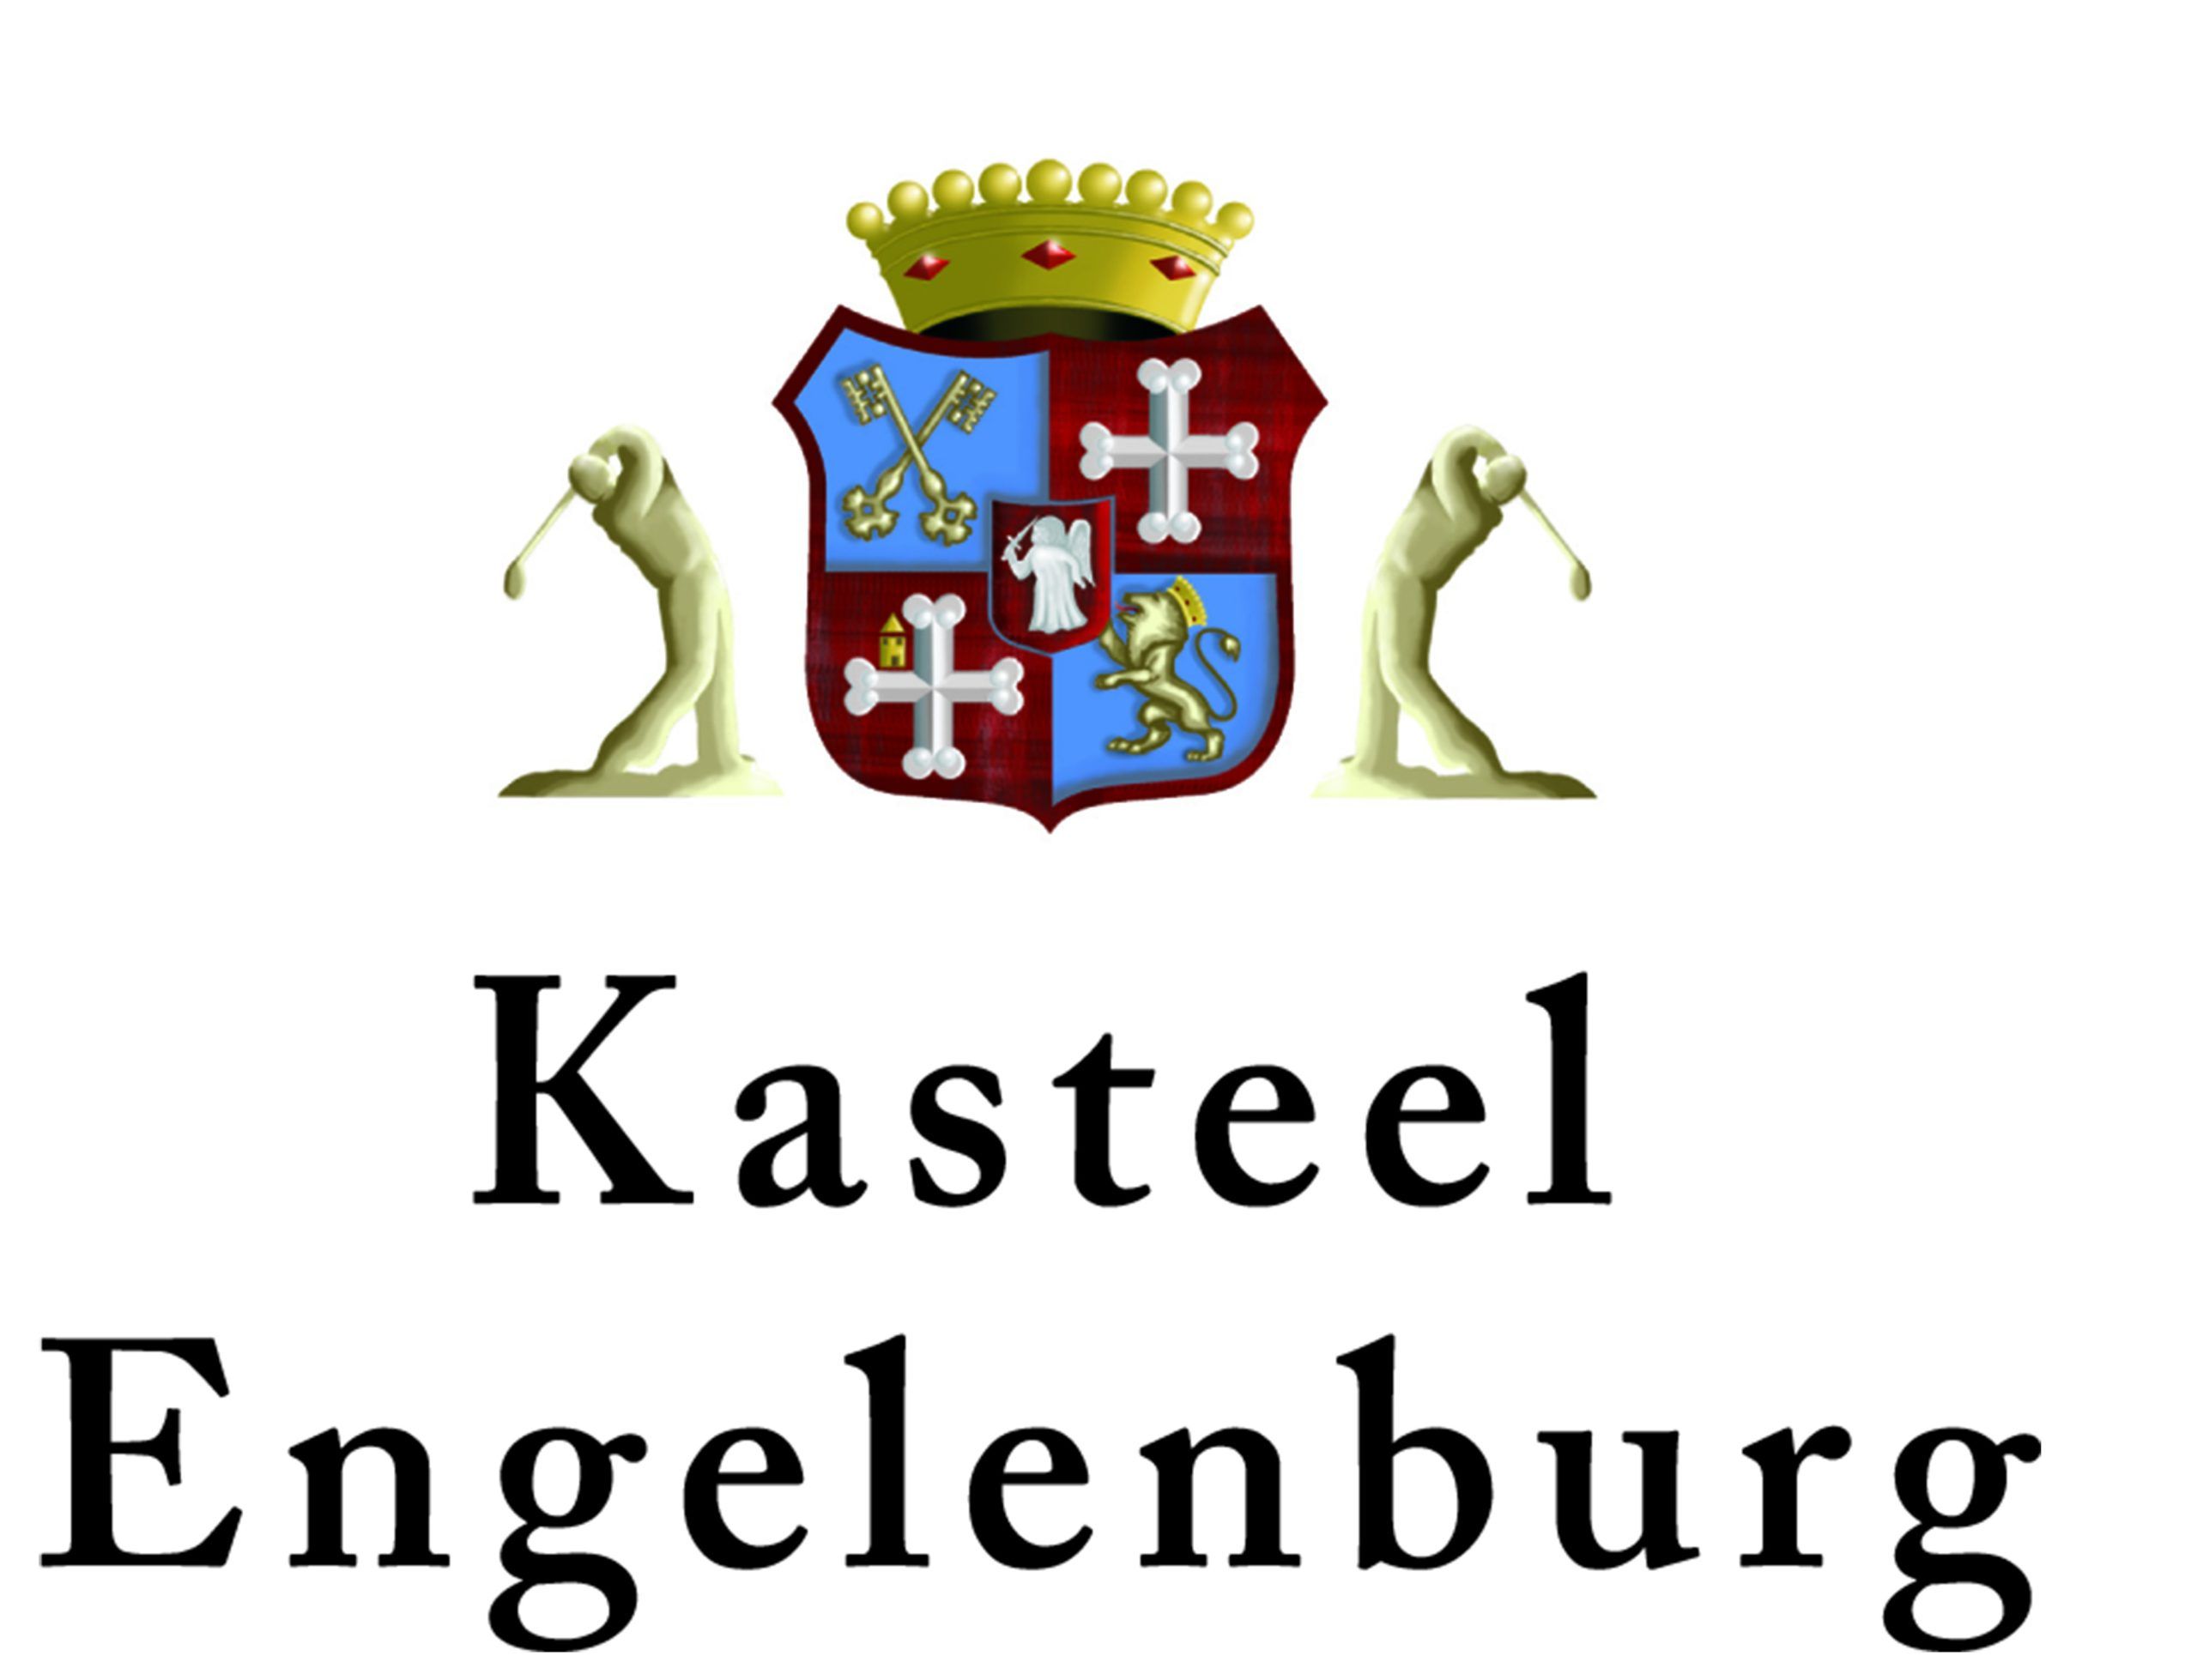 Kasteel Engelenburg